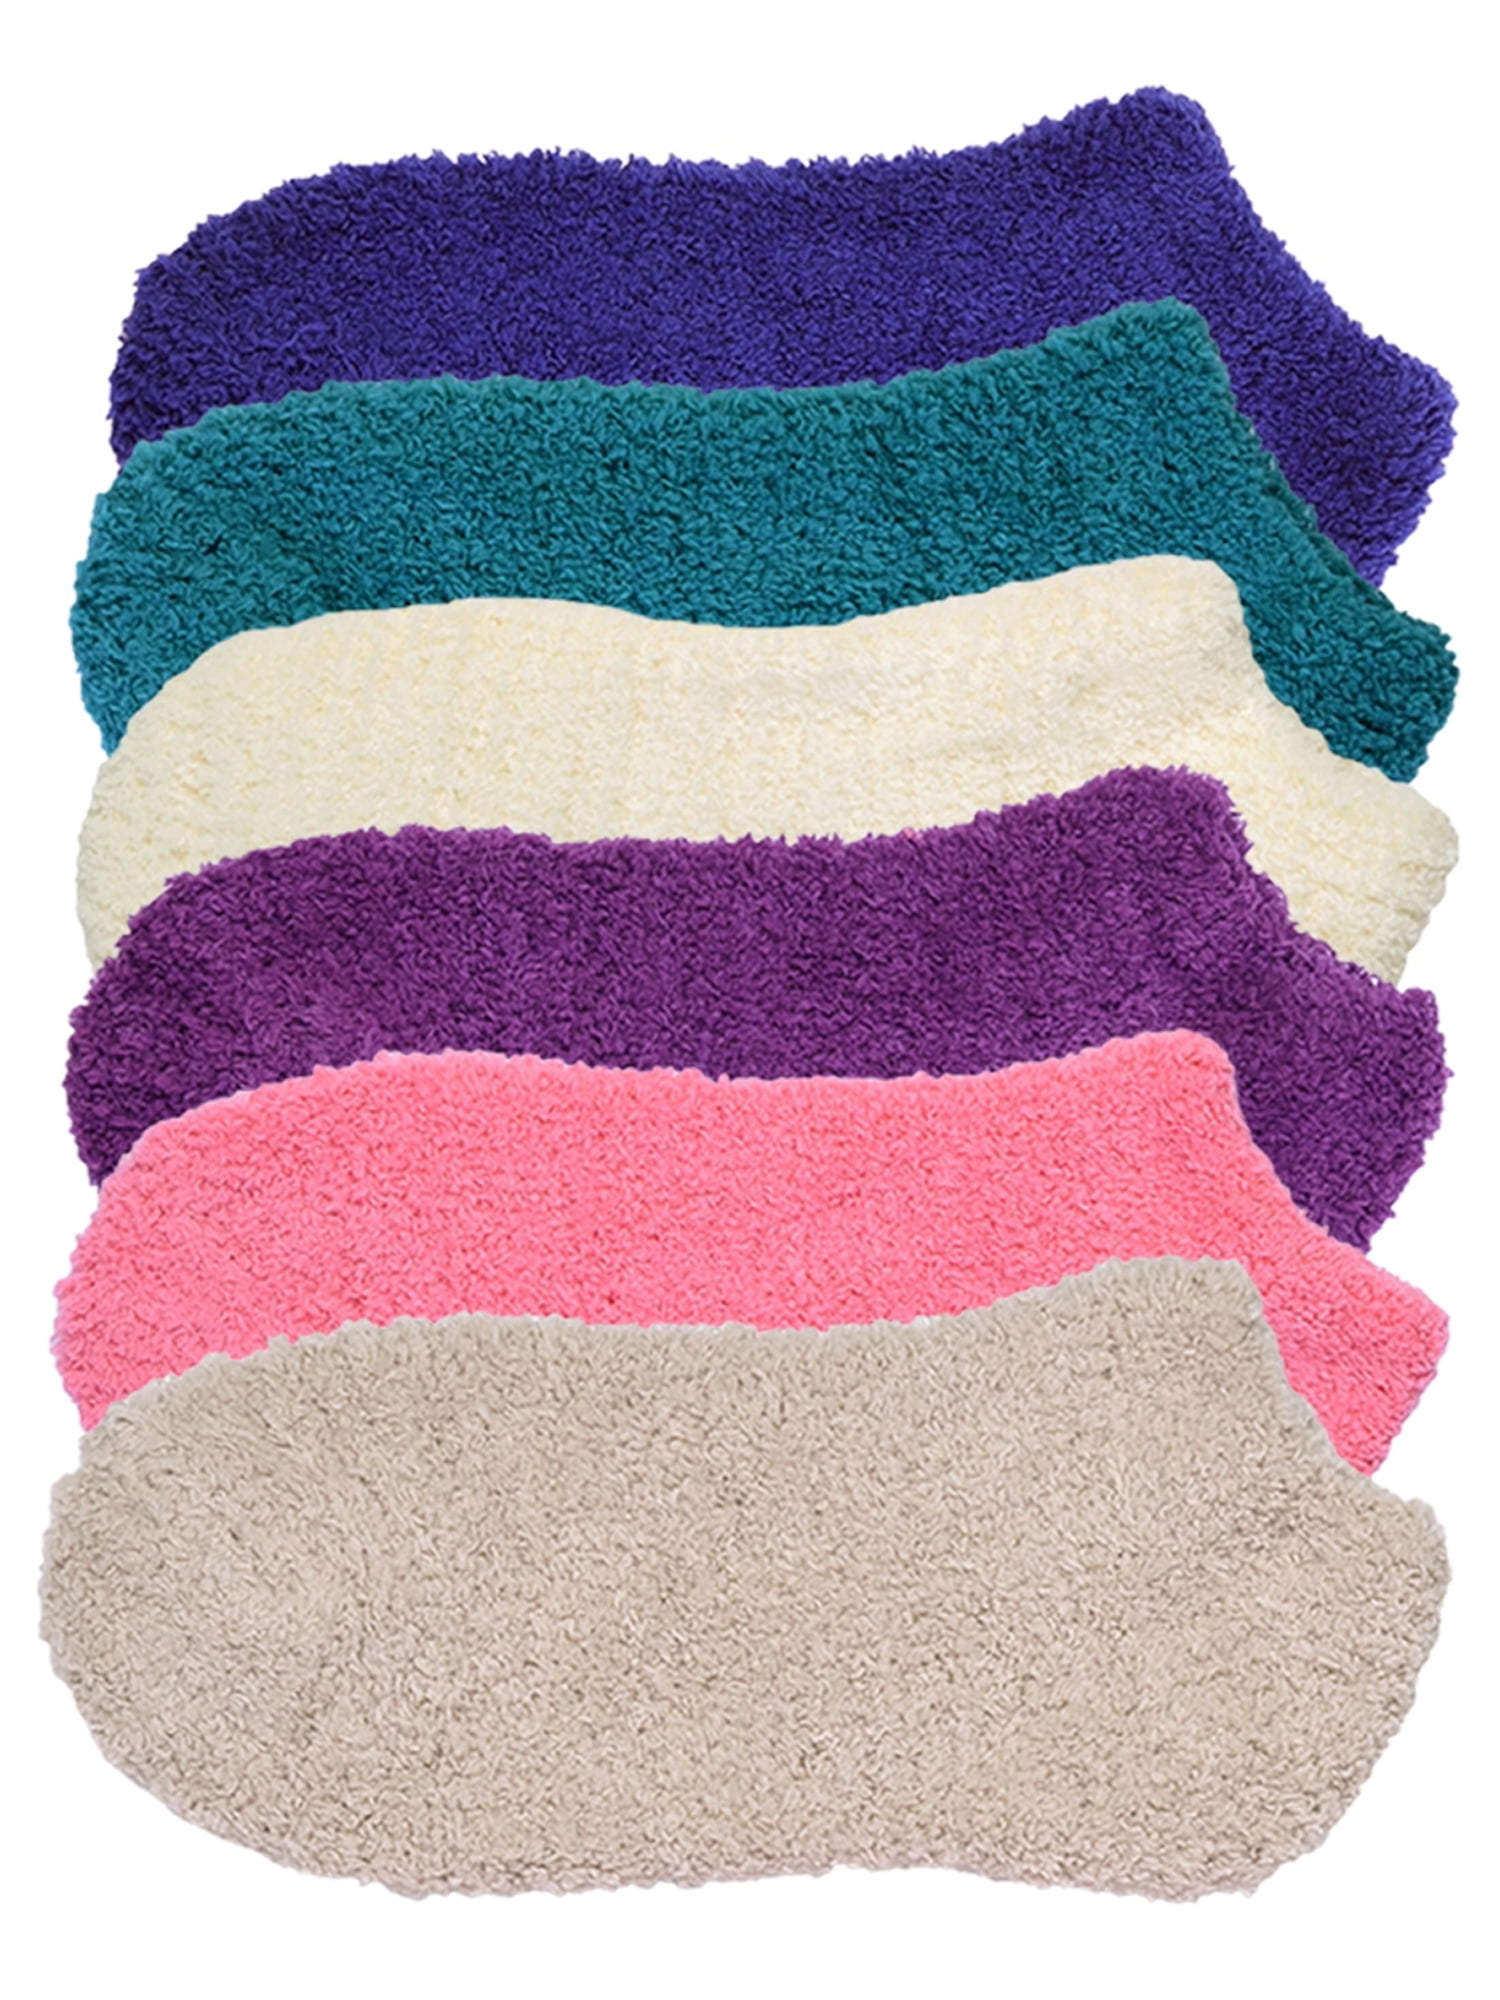 For Womens 3-10 Pairs Soft Cozy Fuzzy Socks Home Warm Striped Slipper Size 9-11 